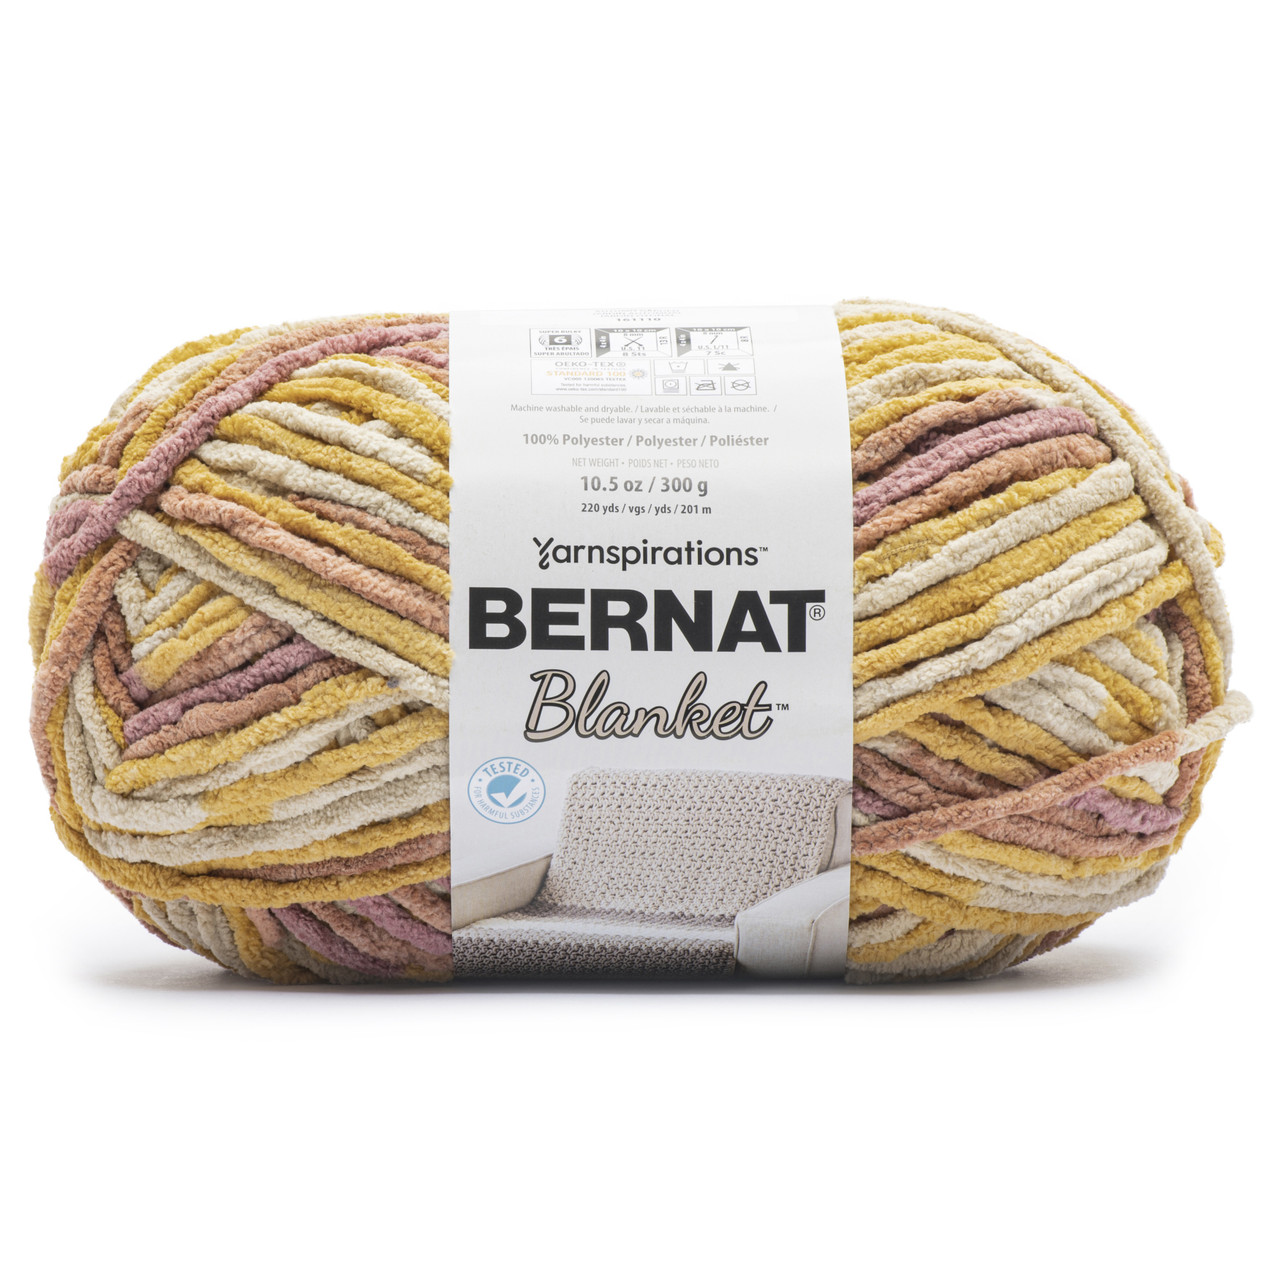 Bernat Blanket Yarn - Big Ball 10.5 oz - 2 Pack with Pattern Sonoma